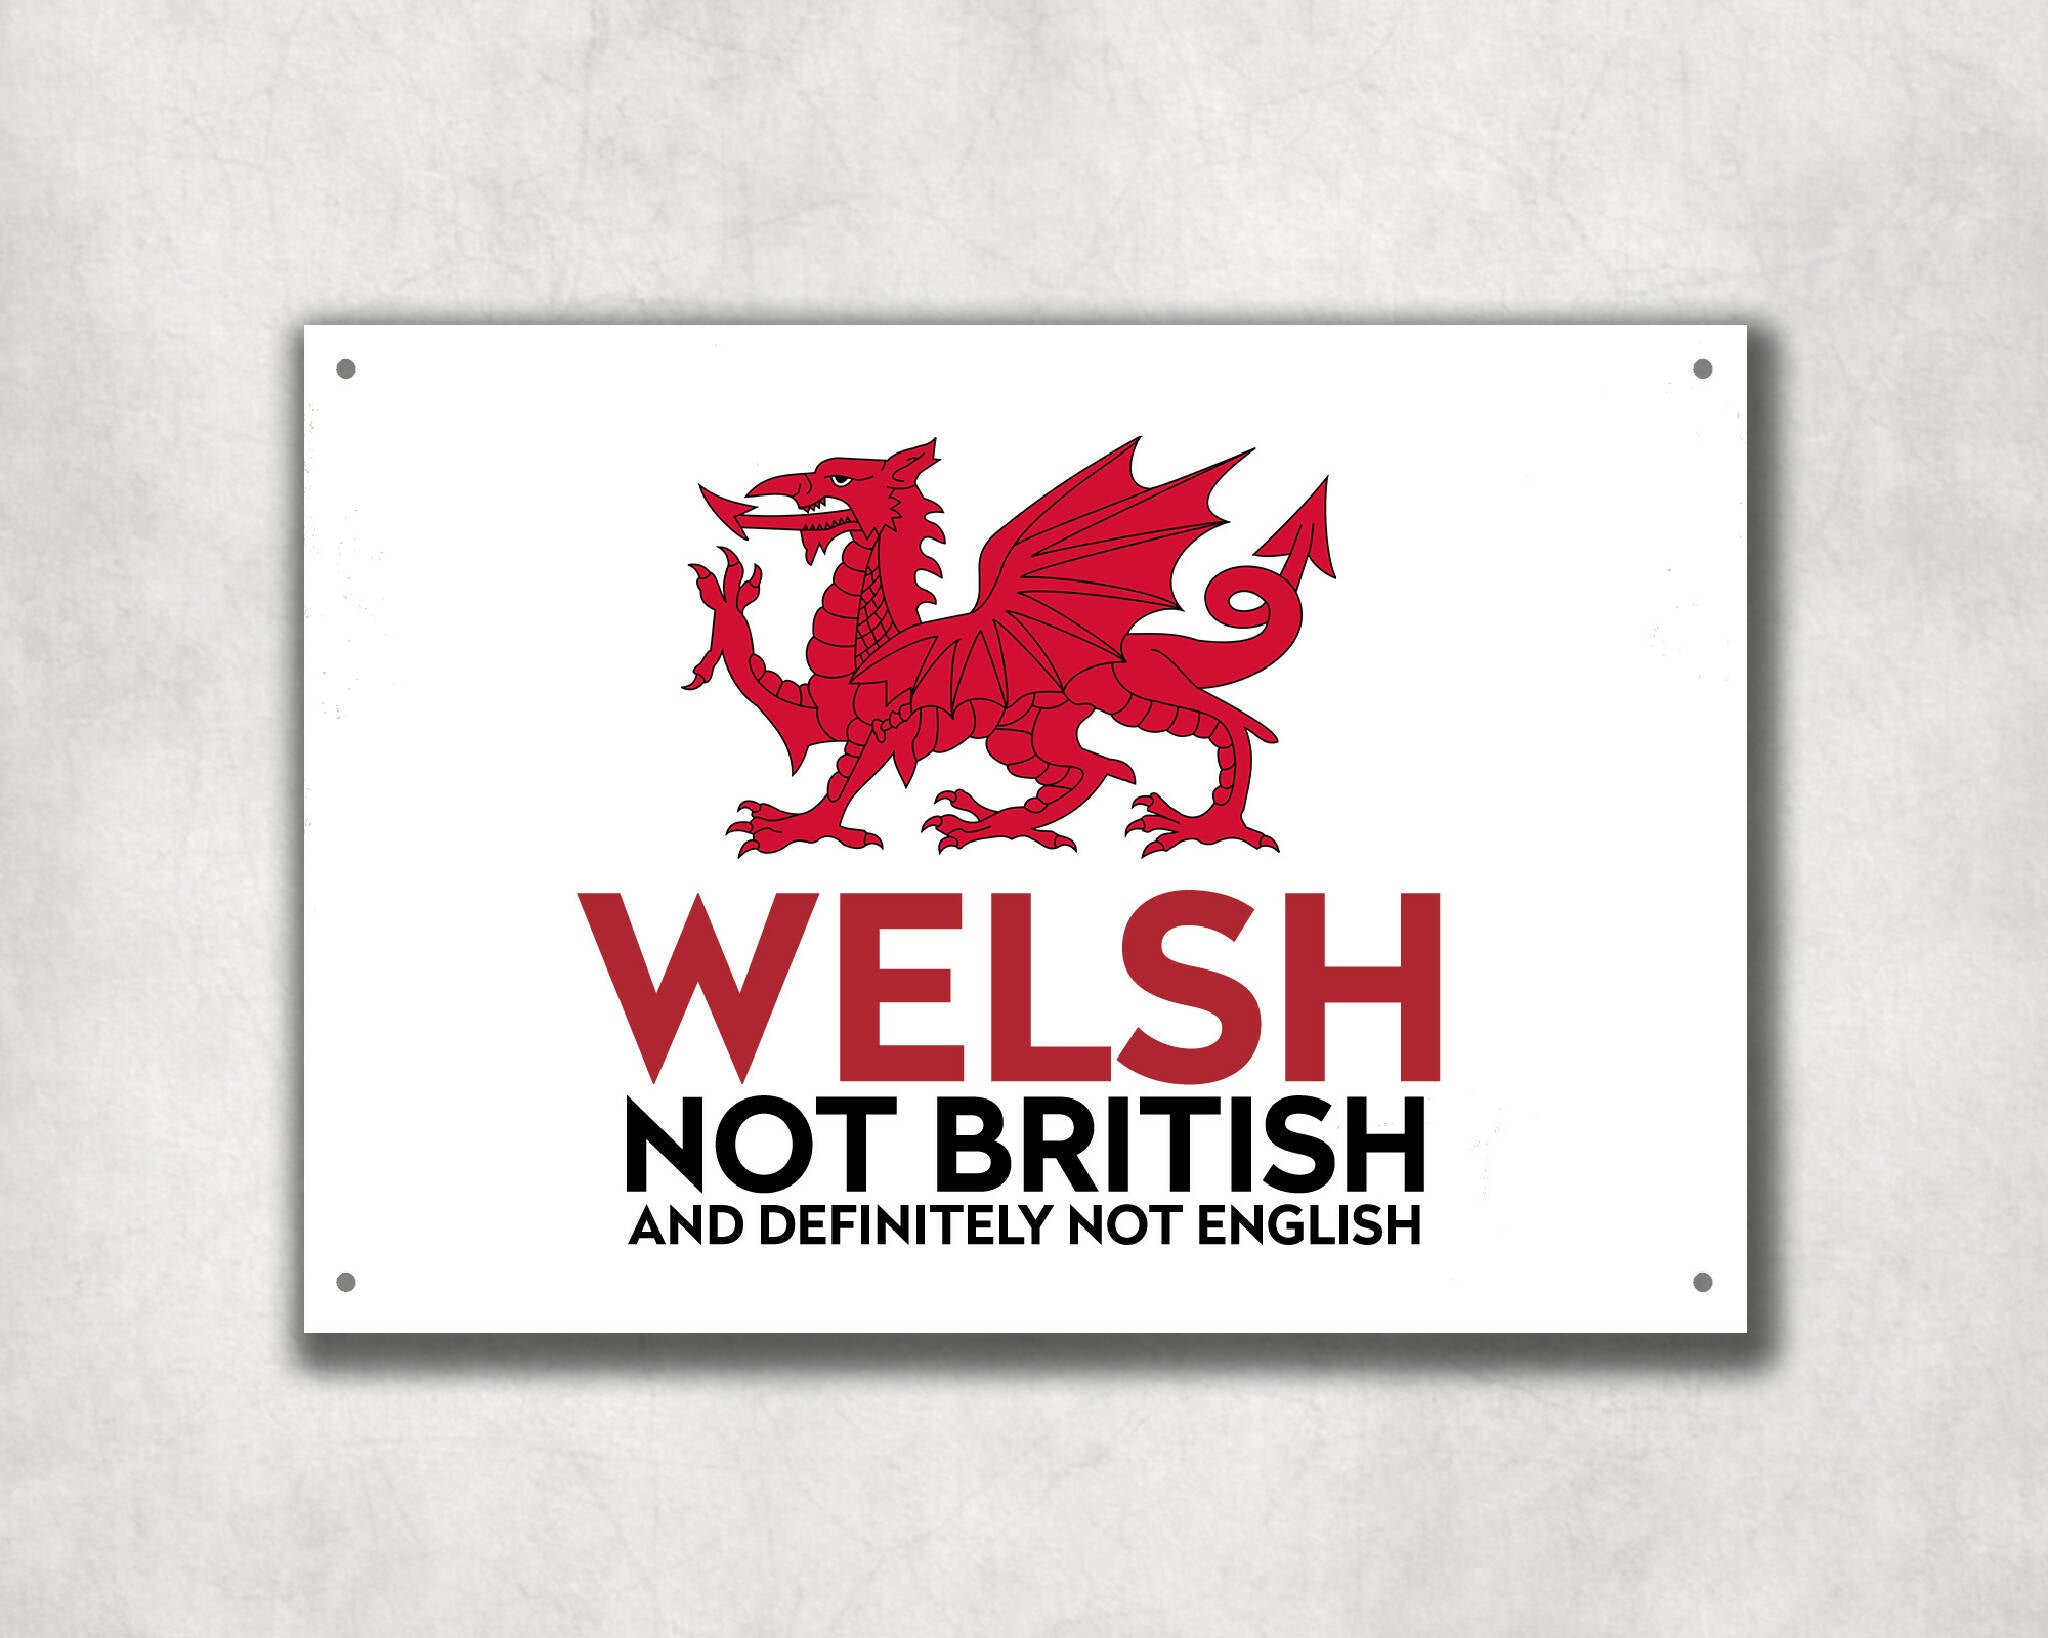 Welsh Not British Definitely Not English | Aluminium Printed Metal Street Sign